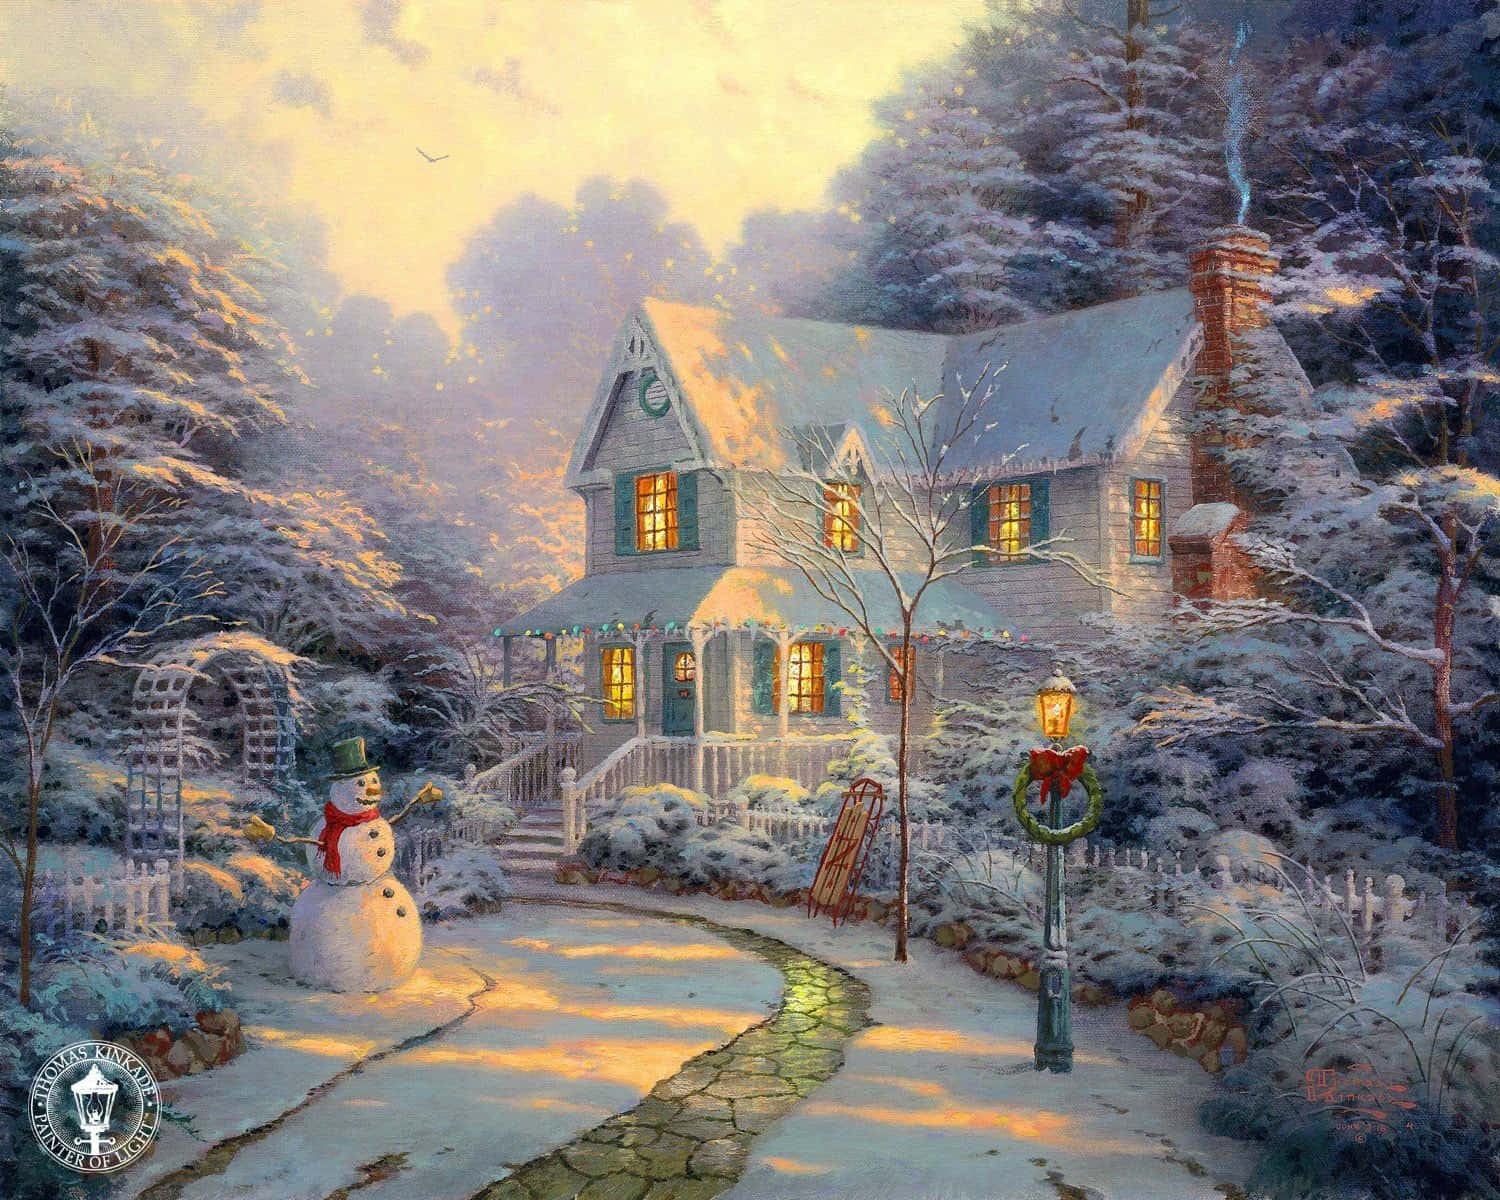 "A magical winter scene"